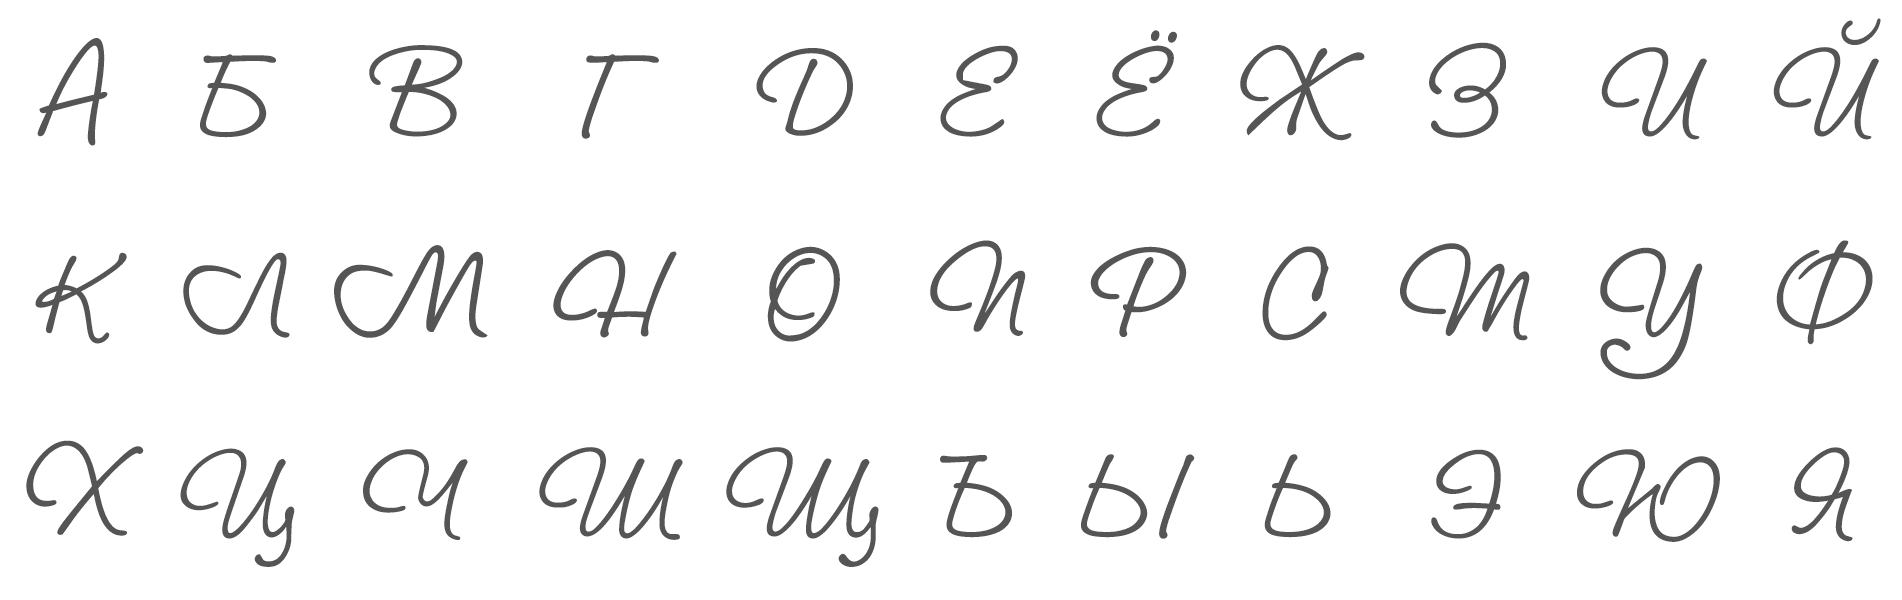 Алфавит русский прописные красивые. Русский алфавит красивыми буквами. Красивый почерк буквы алфавита. Красивый подверк алфавит. Красивый почерк алавит.